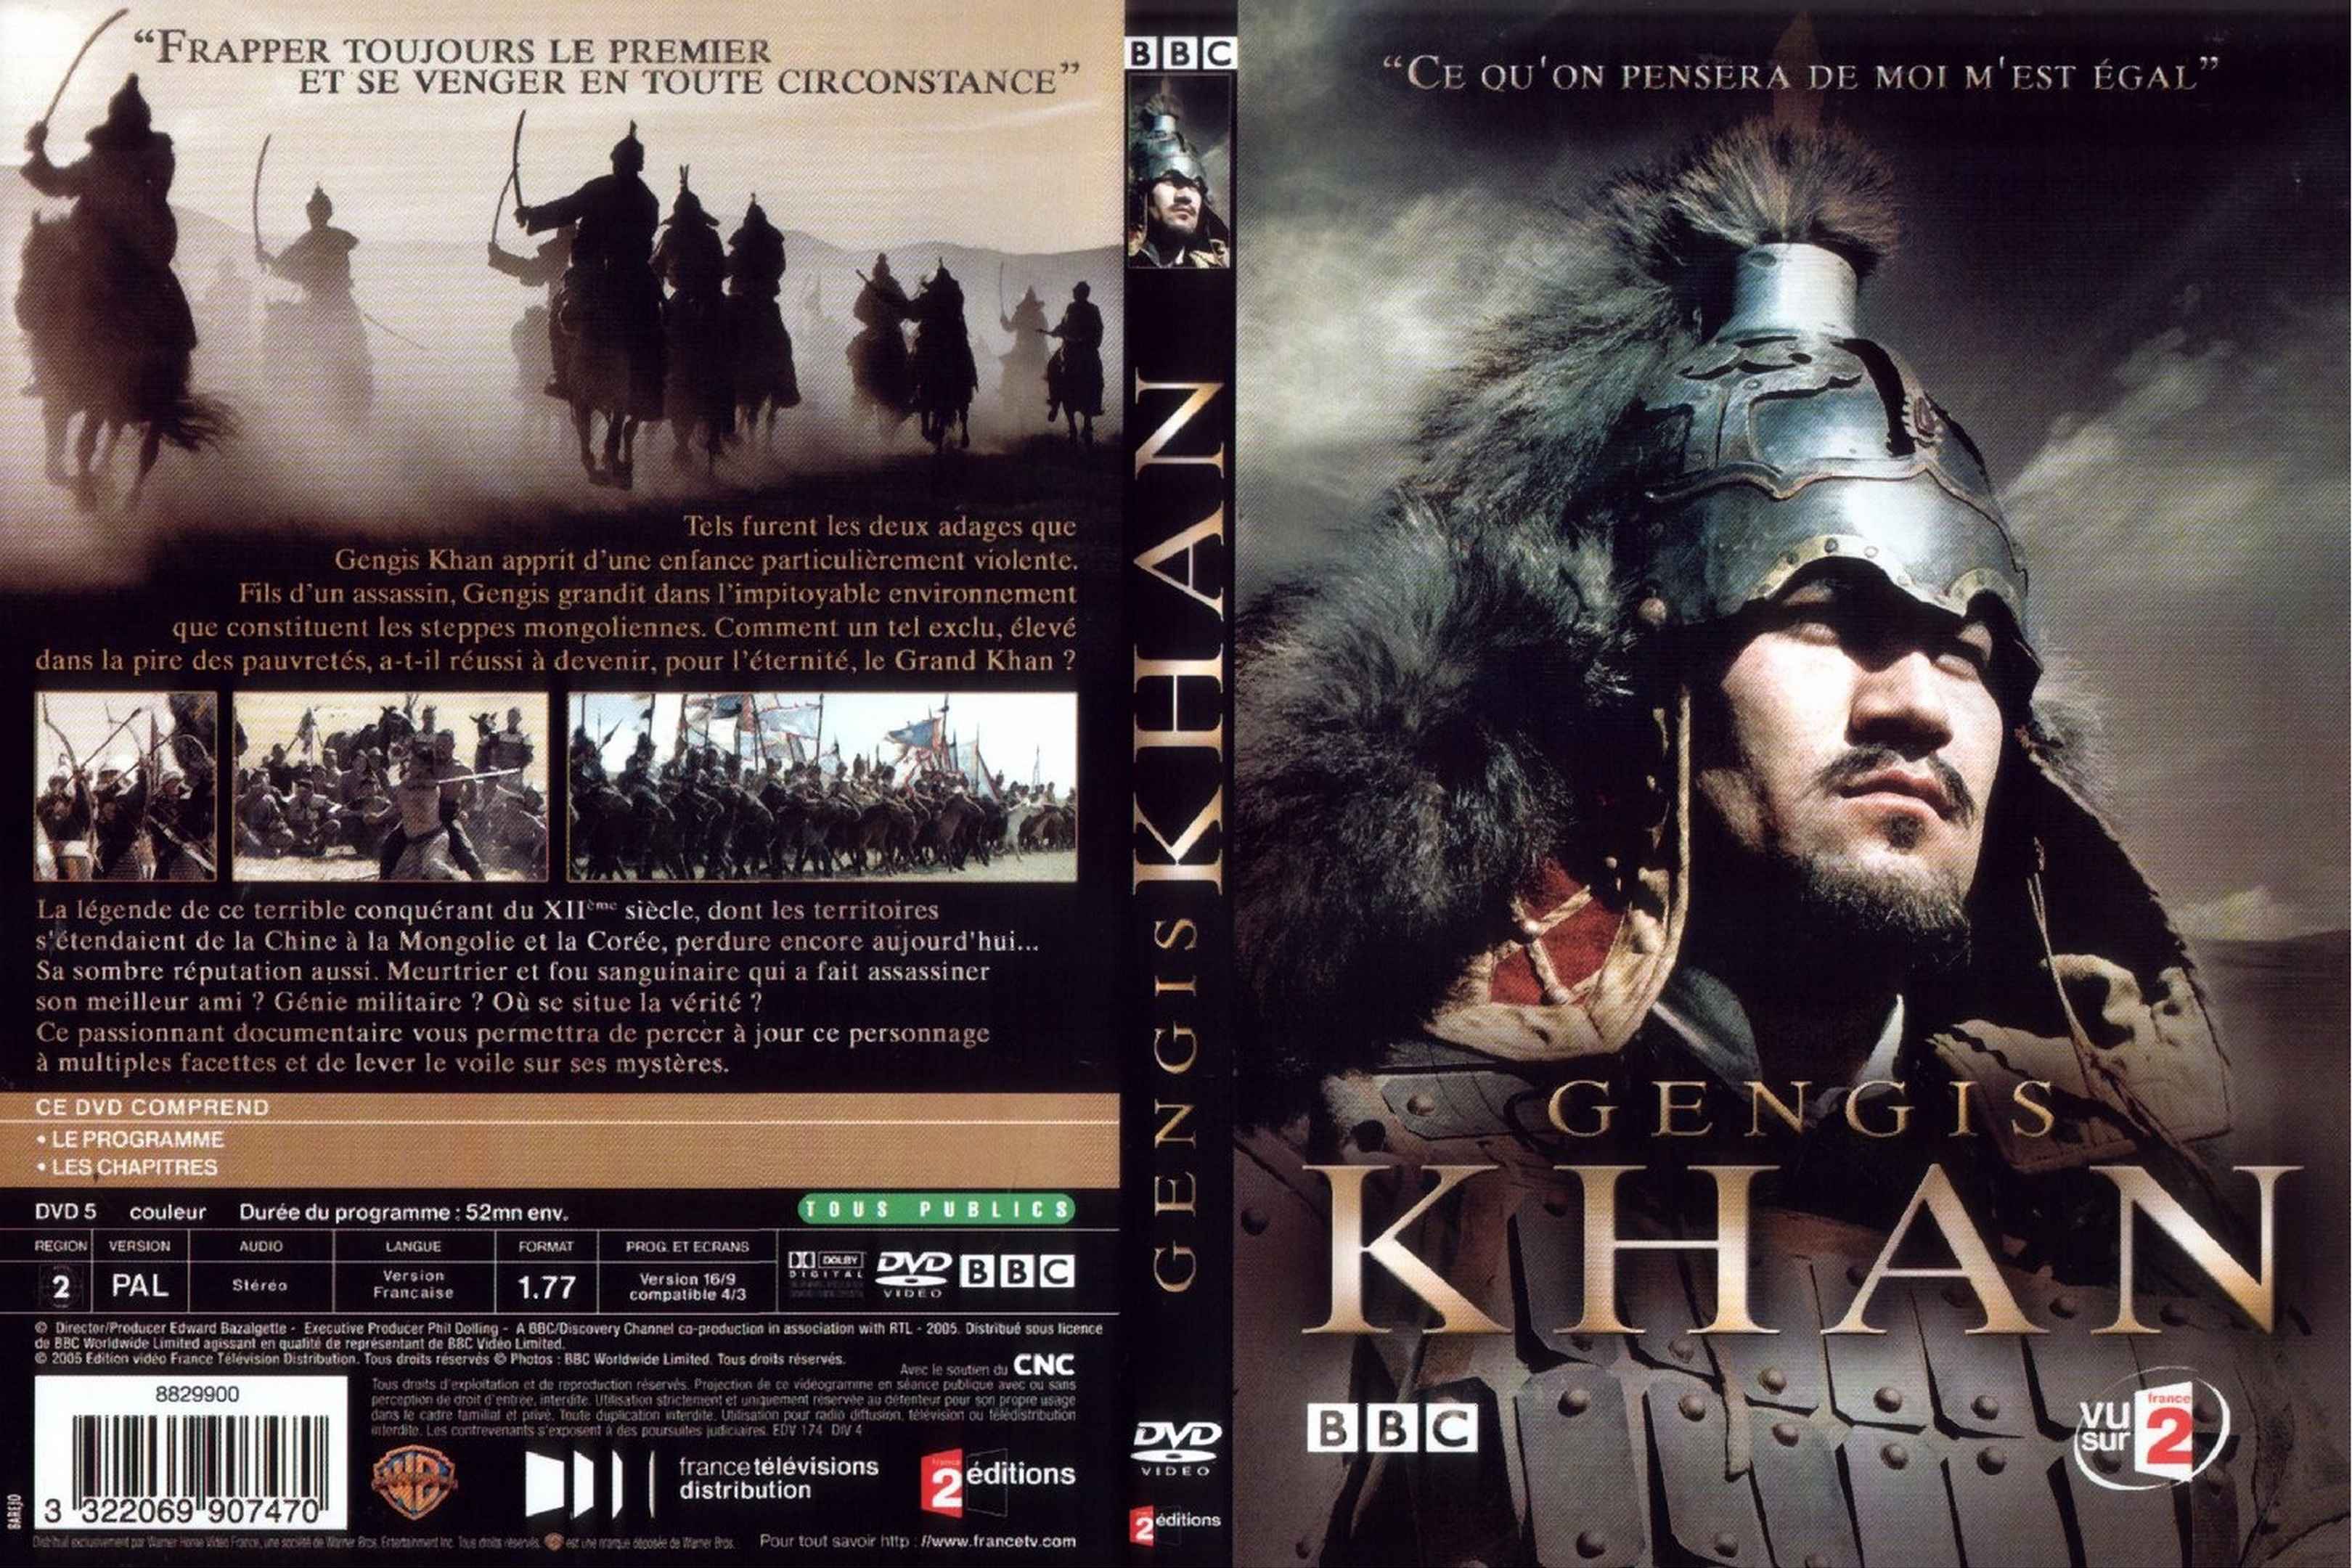 Jaquette DVD Gengis Khan (documentaire)